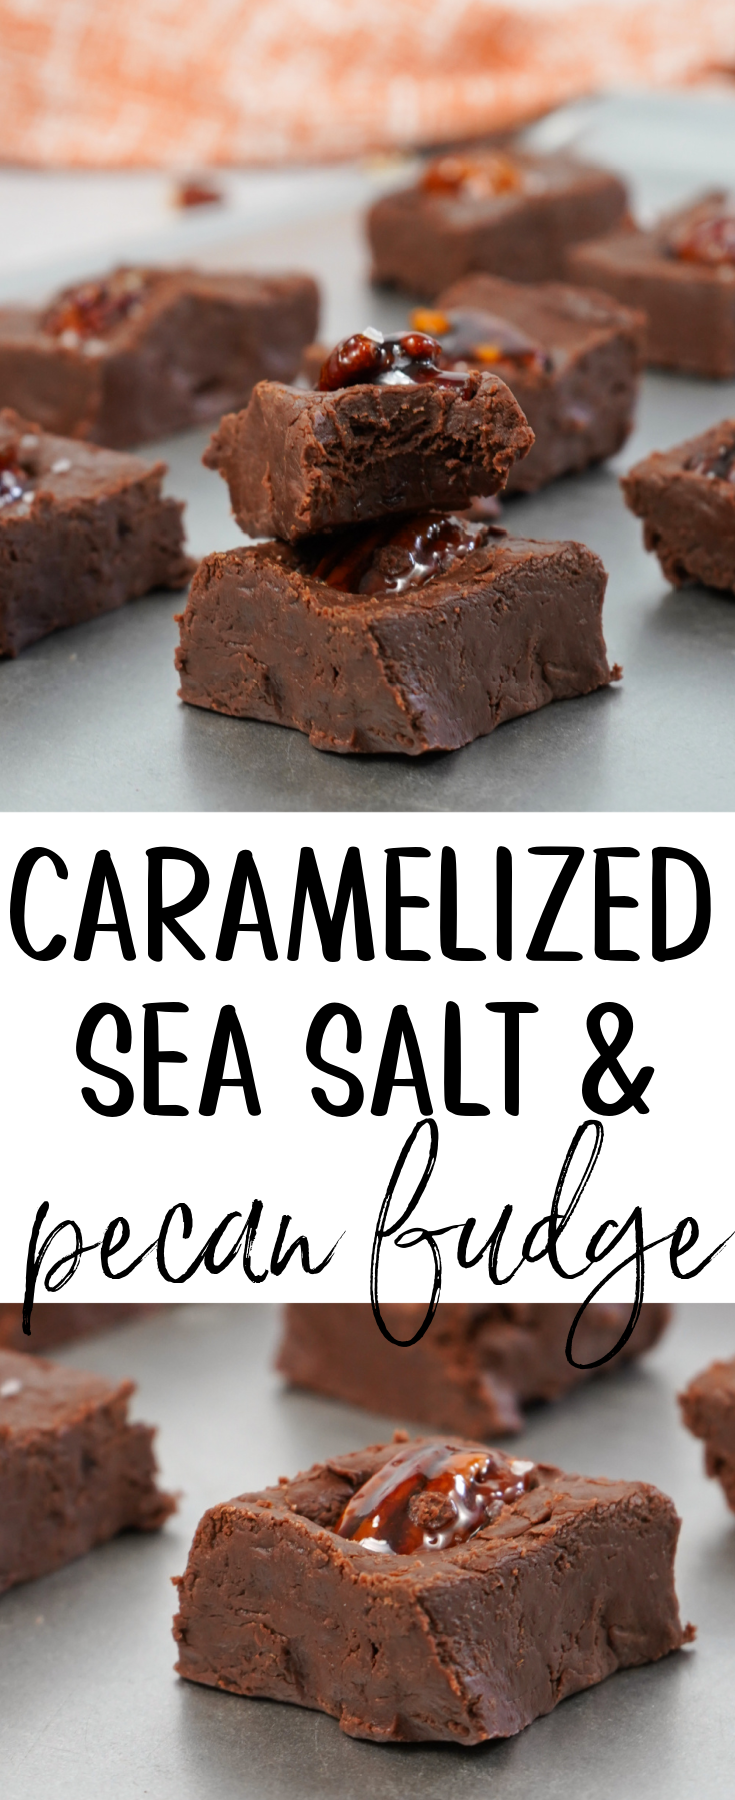 Caramelized Pecan and Sea Salt Fudge